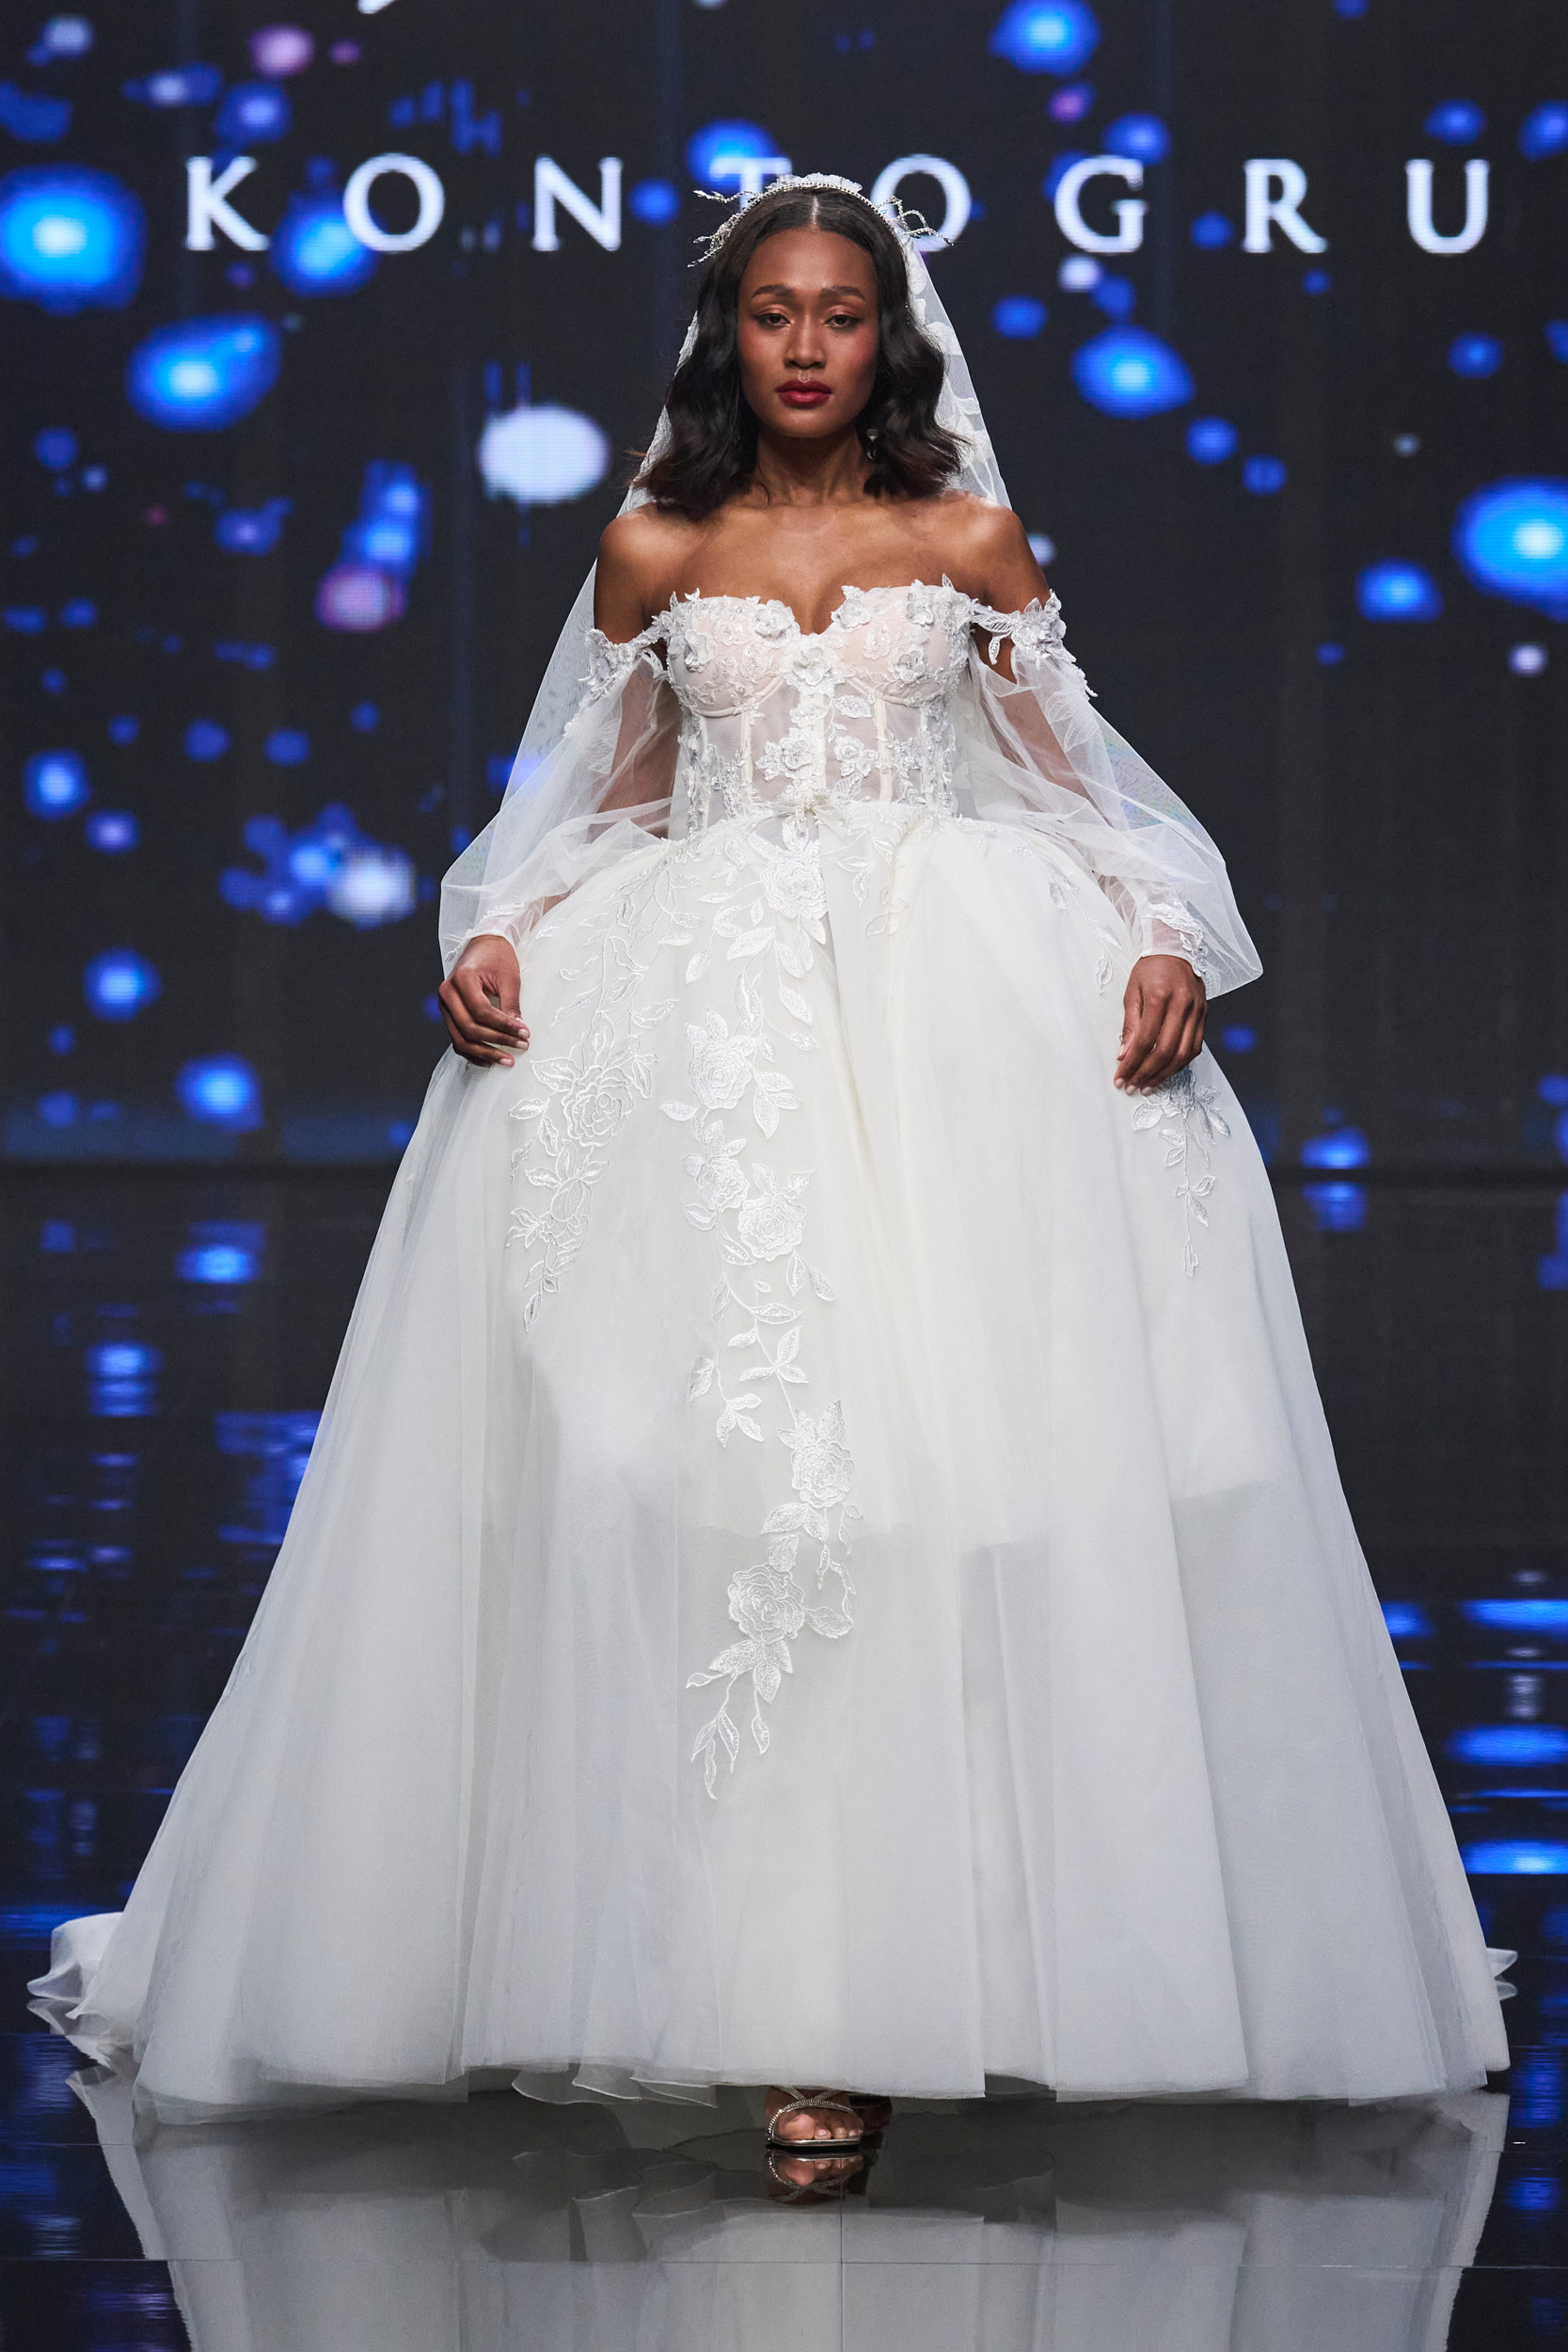 Julia Kontogruni Bridal 2024 Fashion Show 